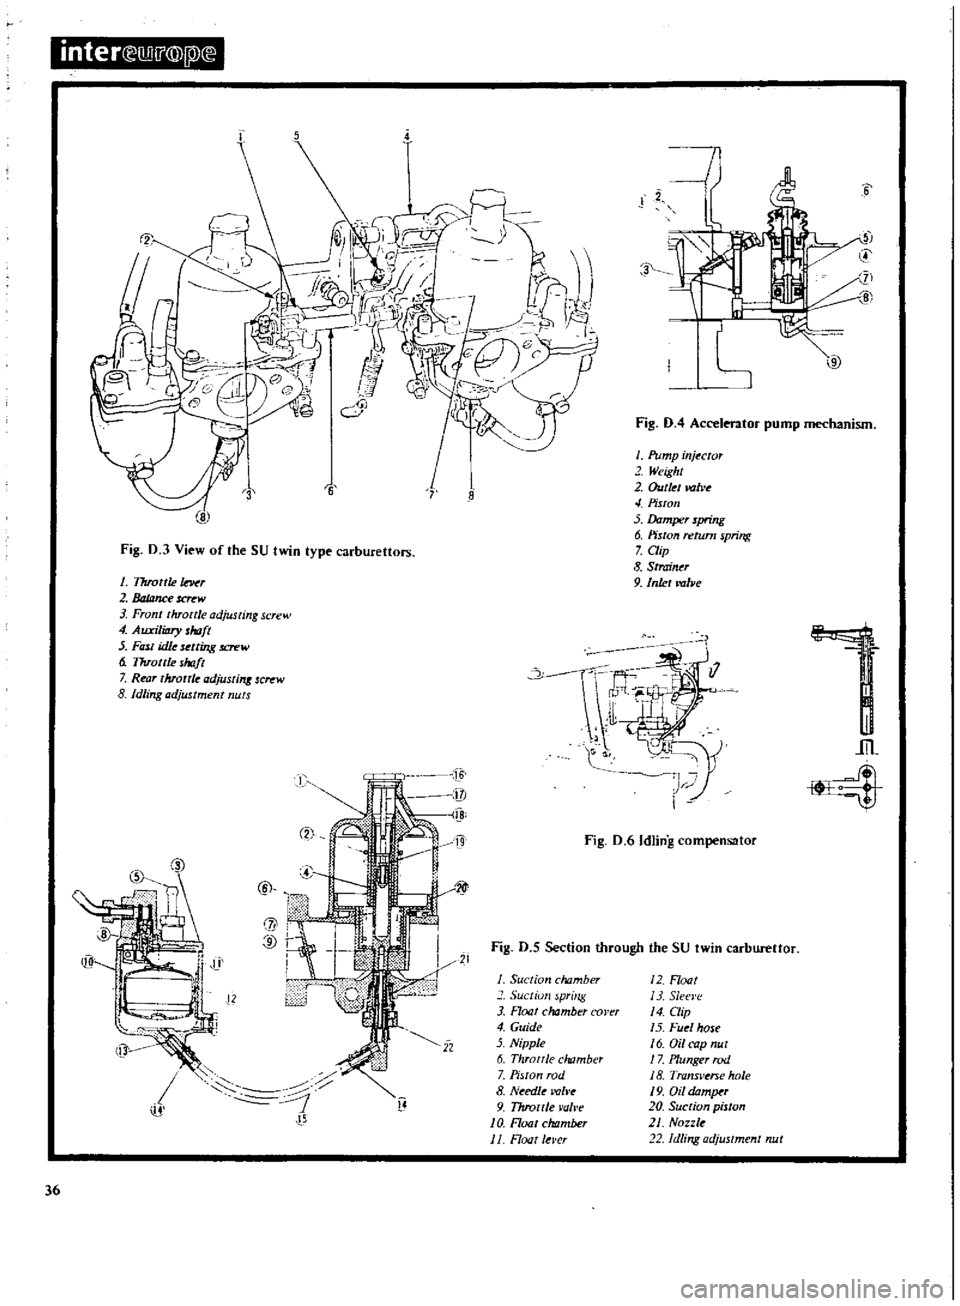 DATSUN 610 1969  Workshop Manual 
inter 
ill 
j

@
pl

T 
i

5

12

Fig 
D 
3

View 
of 
the 
SU 
twin

type 
carburettors

1

Throttle 
r

2 
JaJana

crew

Front 
throttle

adjusting 
screw

4

AuxiliDry 
shoft

5 
Ftnt 
idle

selli